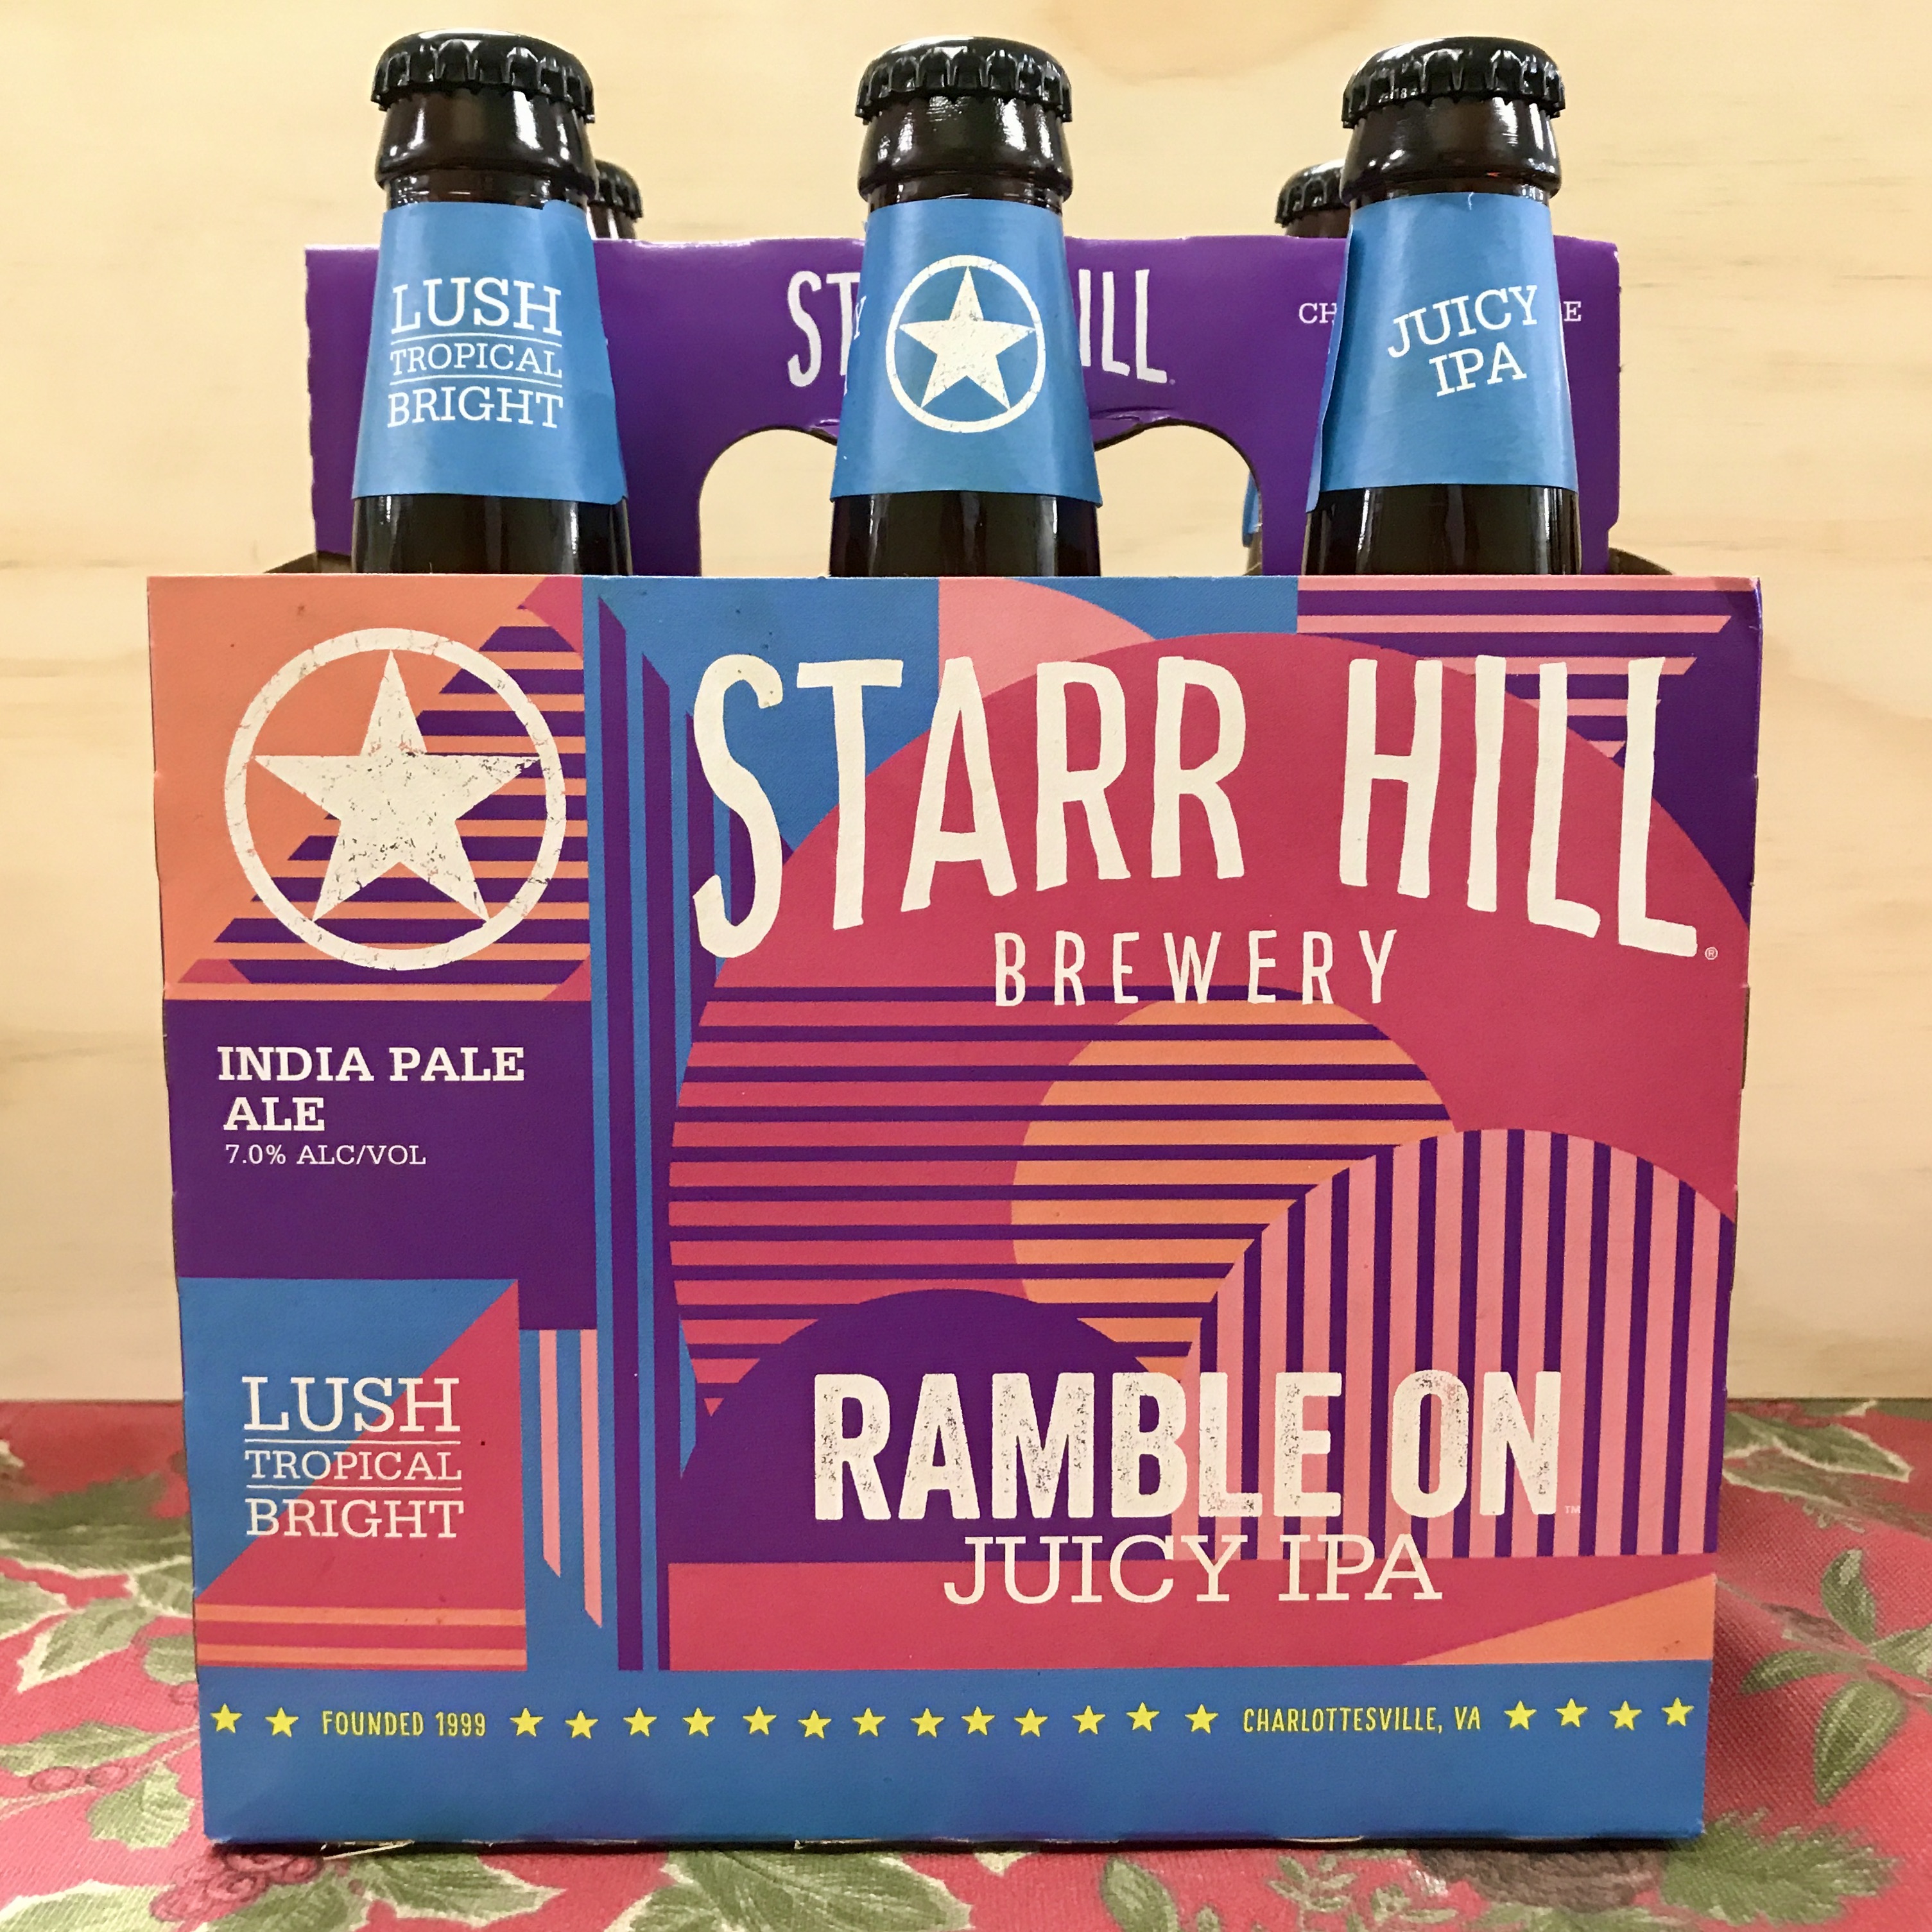 Starr Hill Ramble On Juicy IPA 6 x 12oz bottles